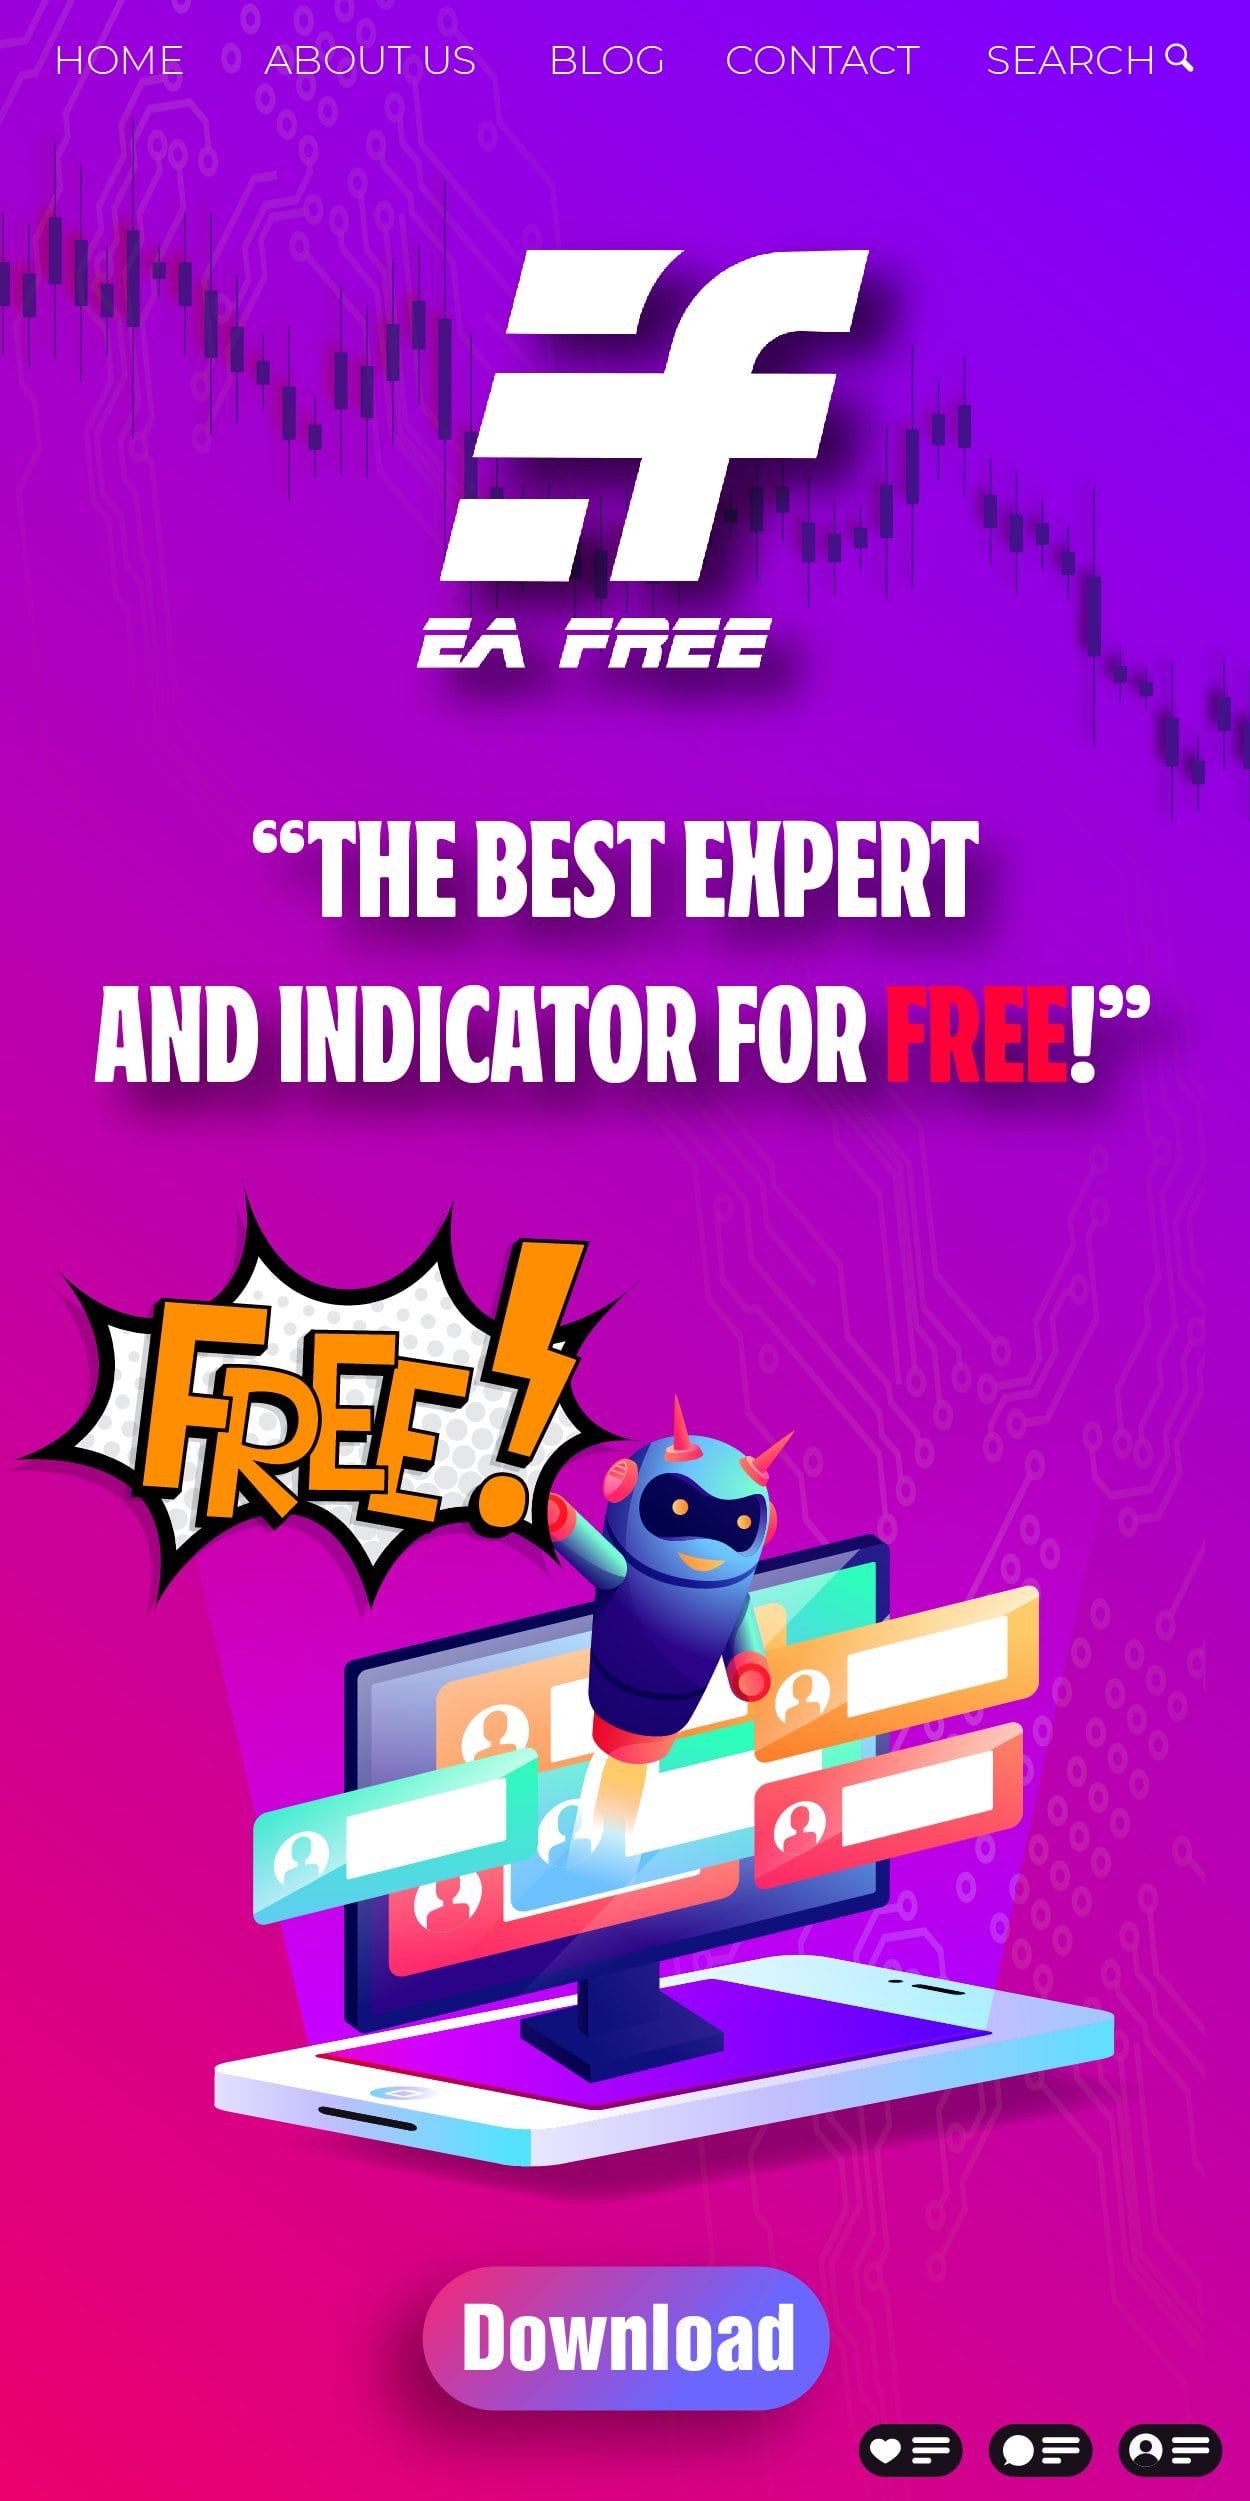 Home - EA Free